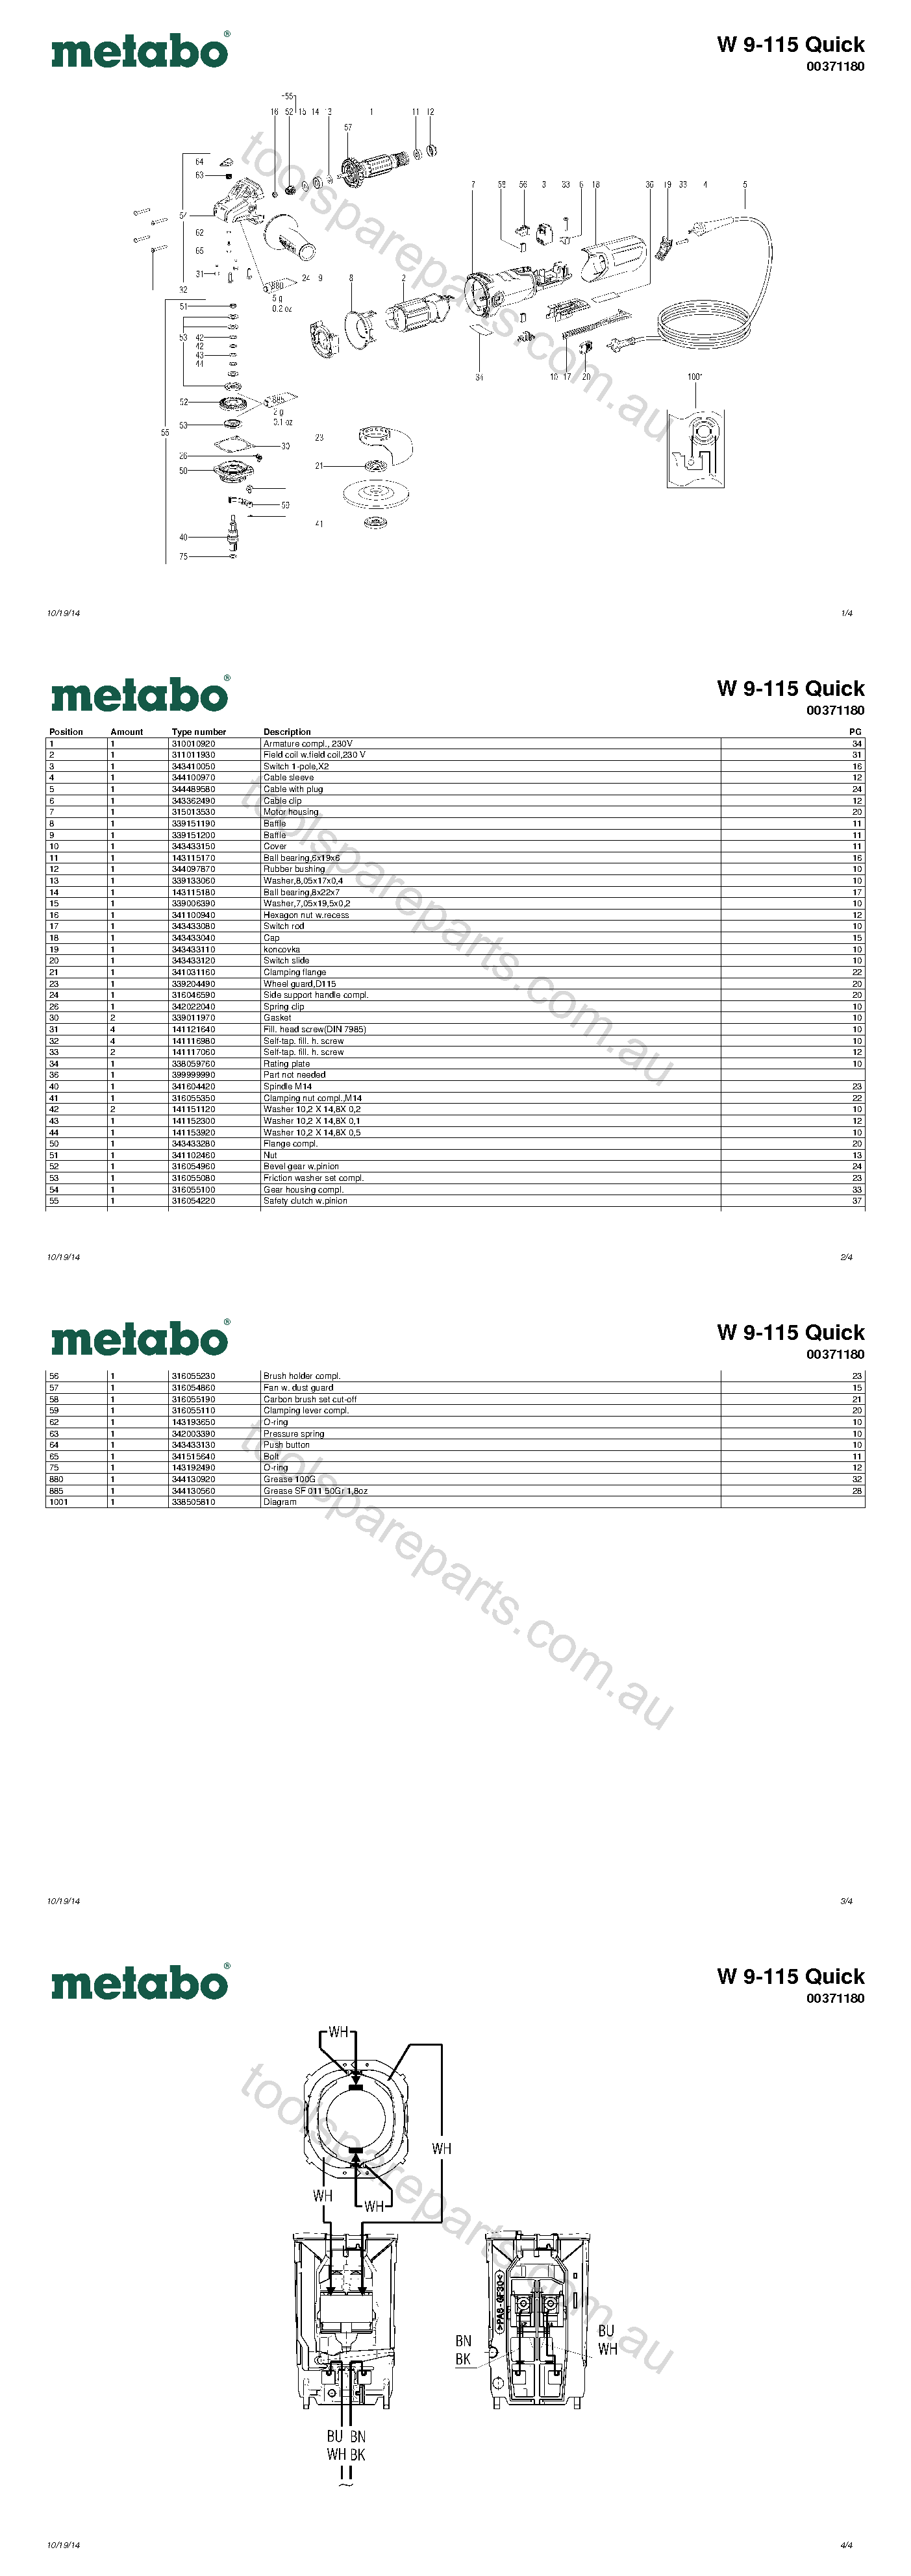 Metabo W 9-115 Quick 00371180  Diagram 1